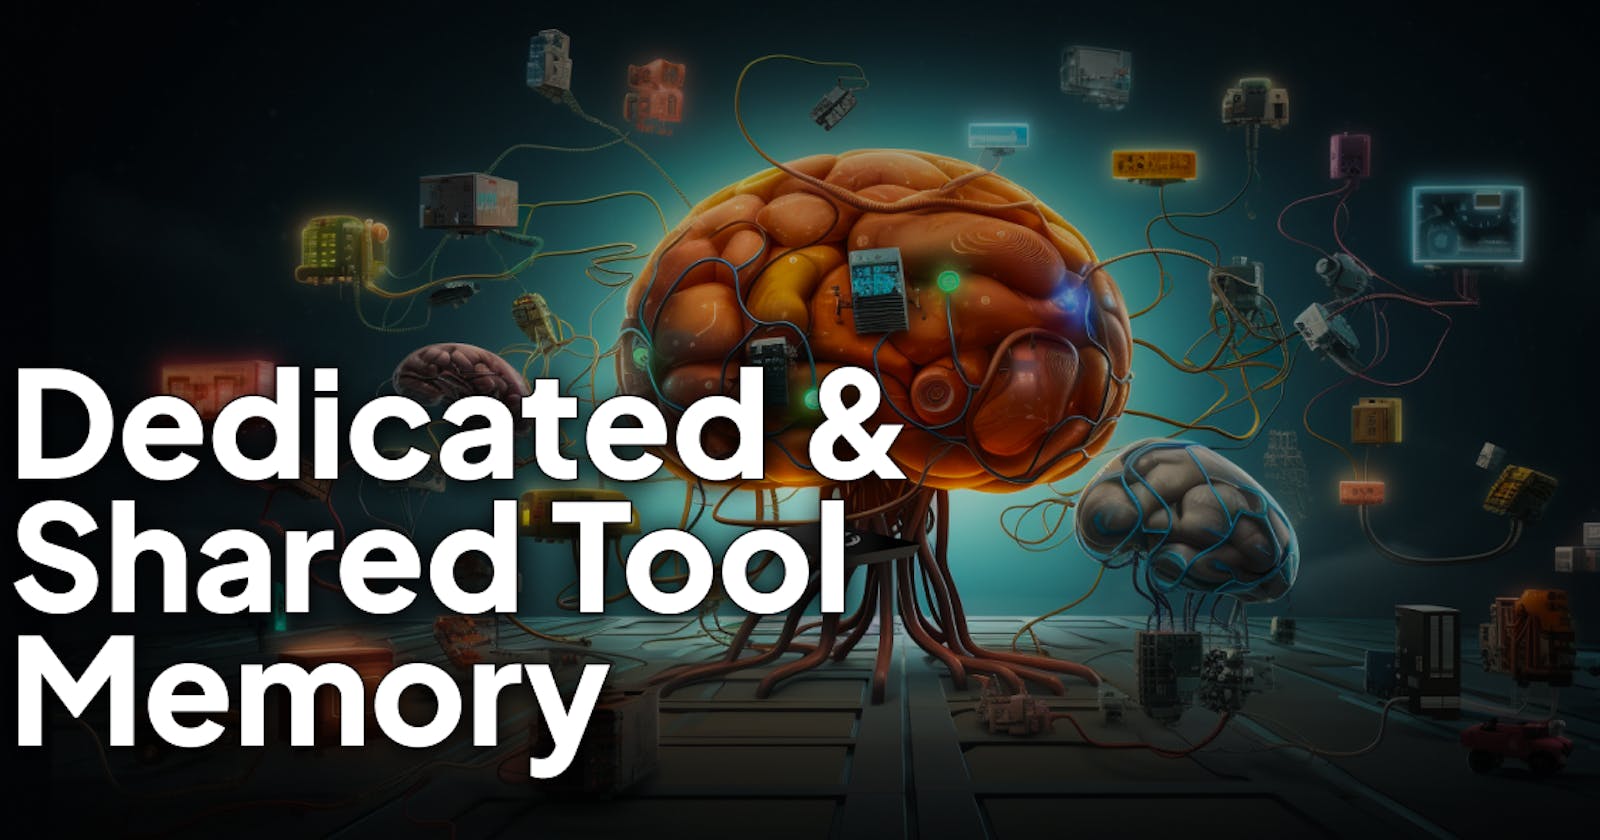 Understanding how dedicated & shared tool memory works in SuperAGI